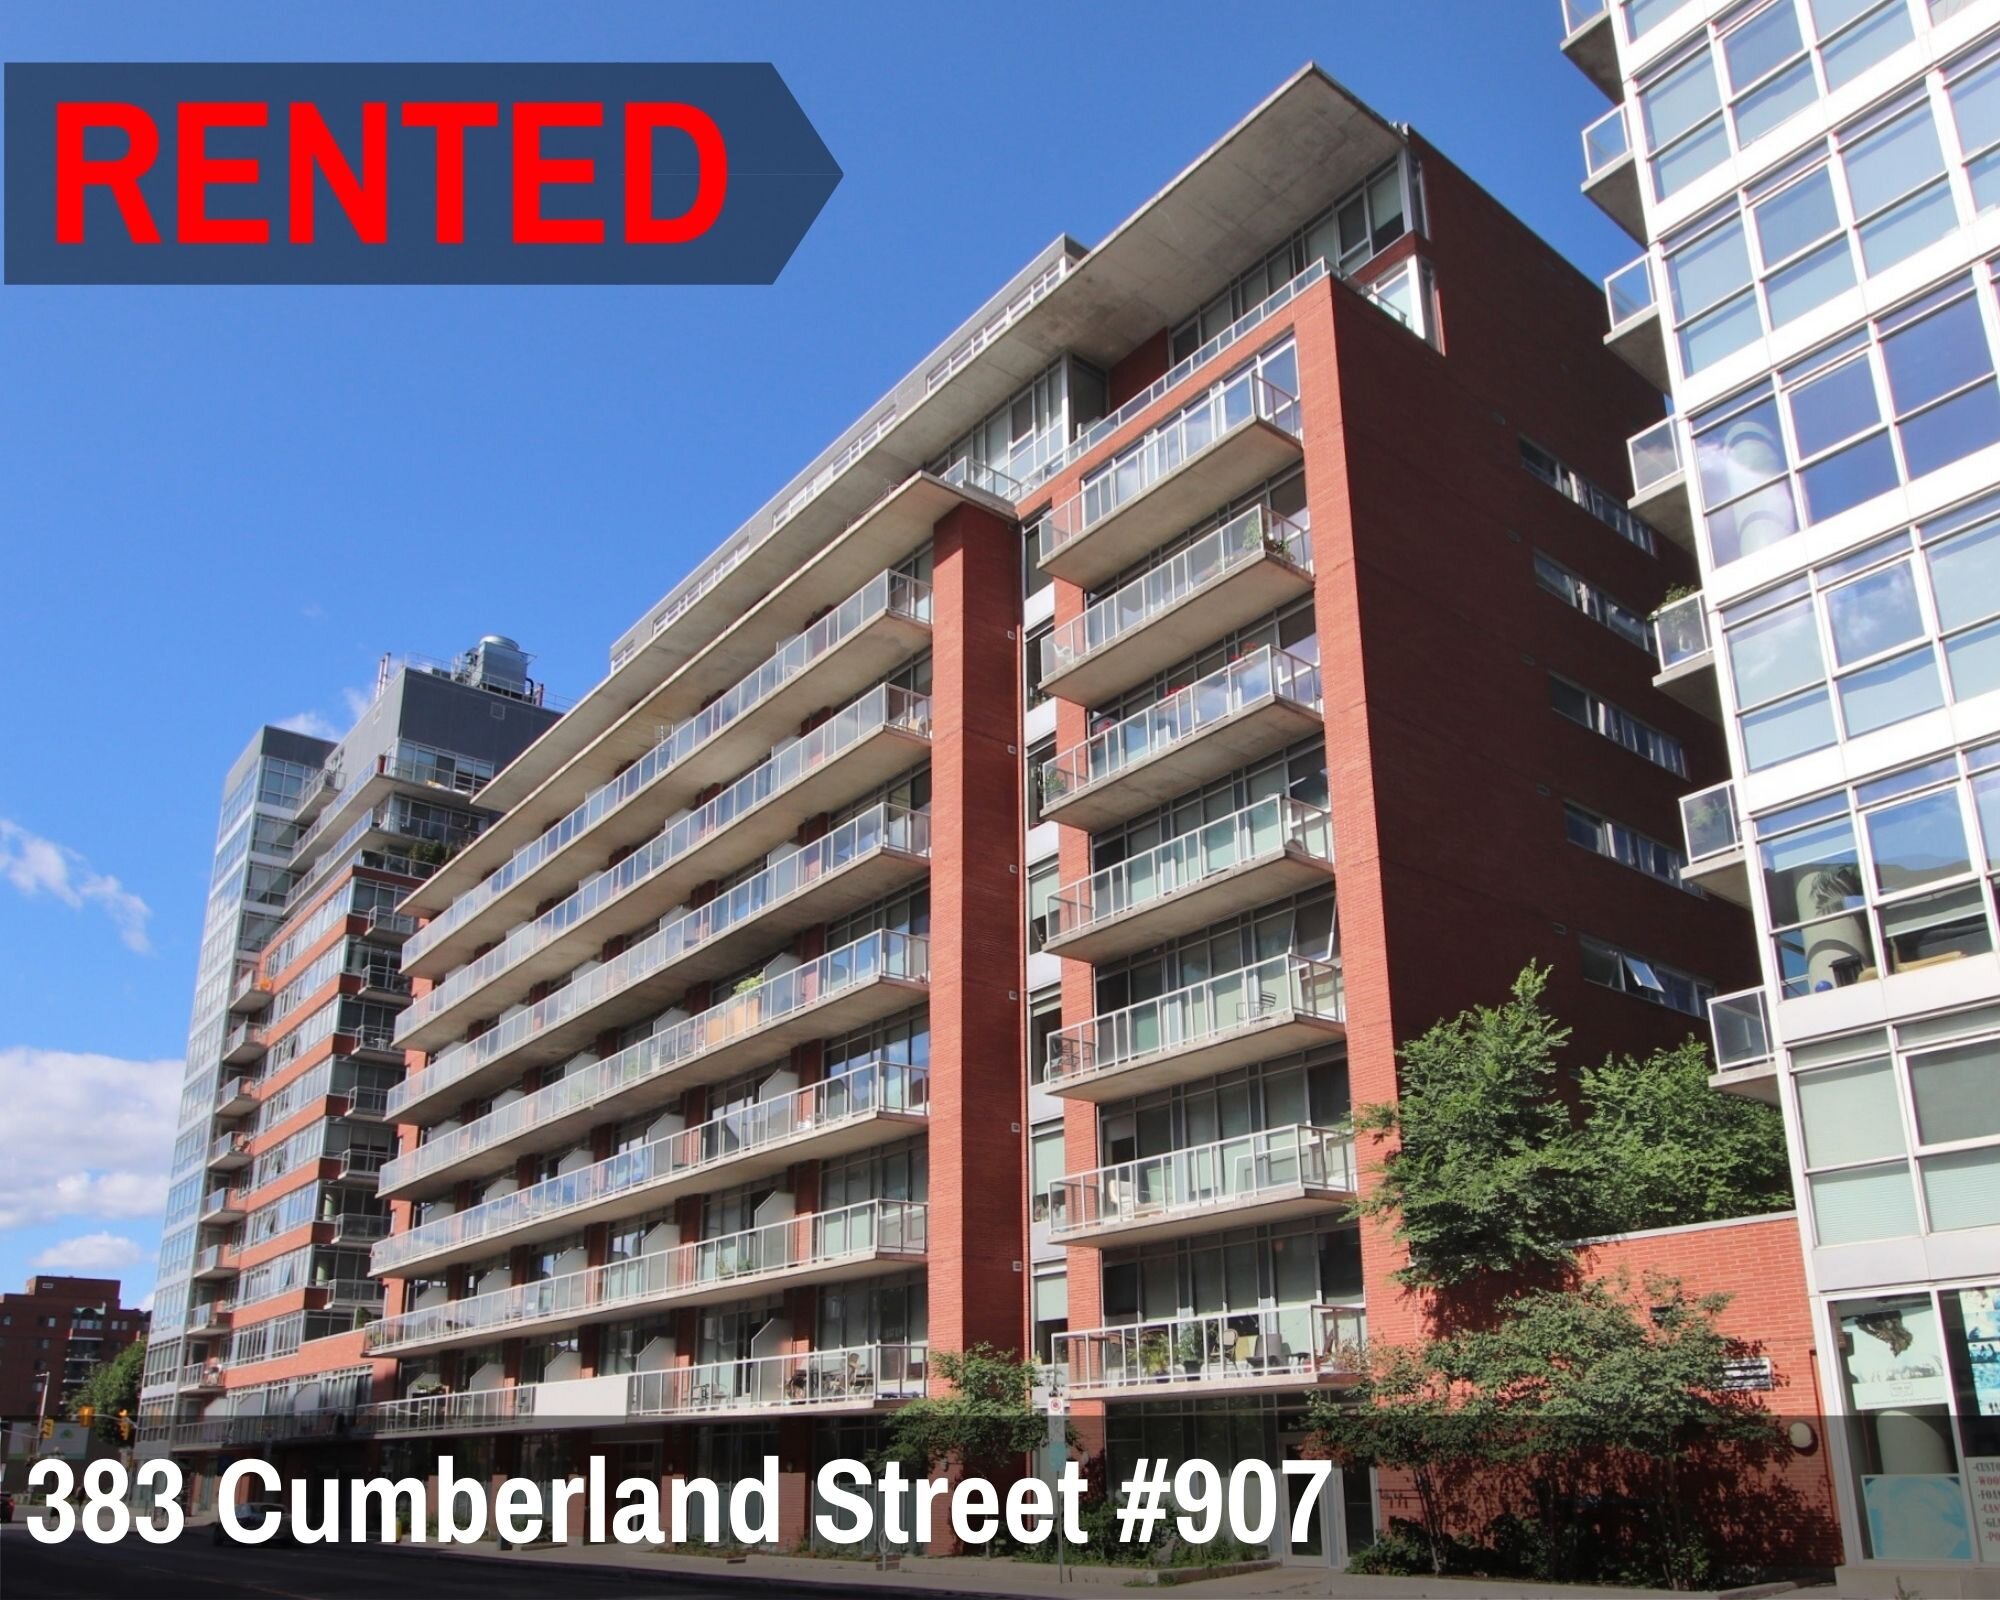 383 Cumberland Street #907 - For Rent.jpg